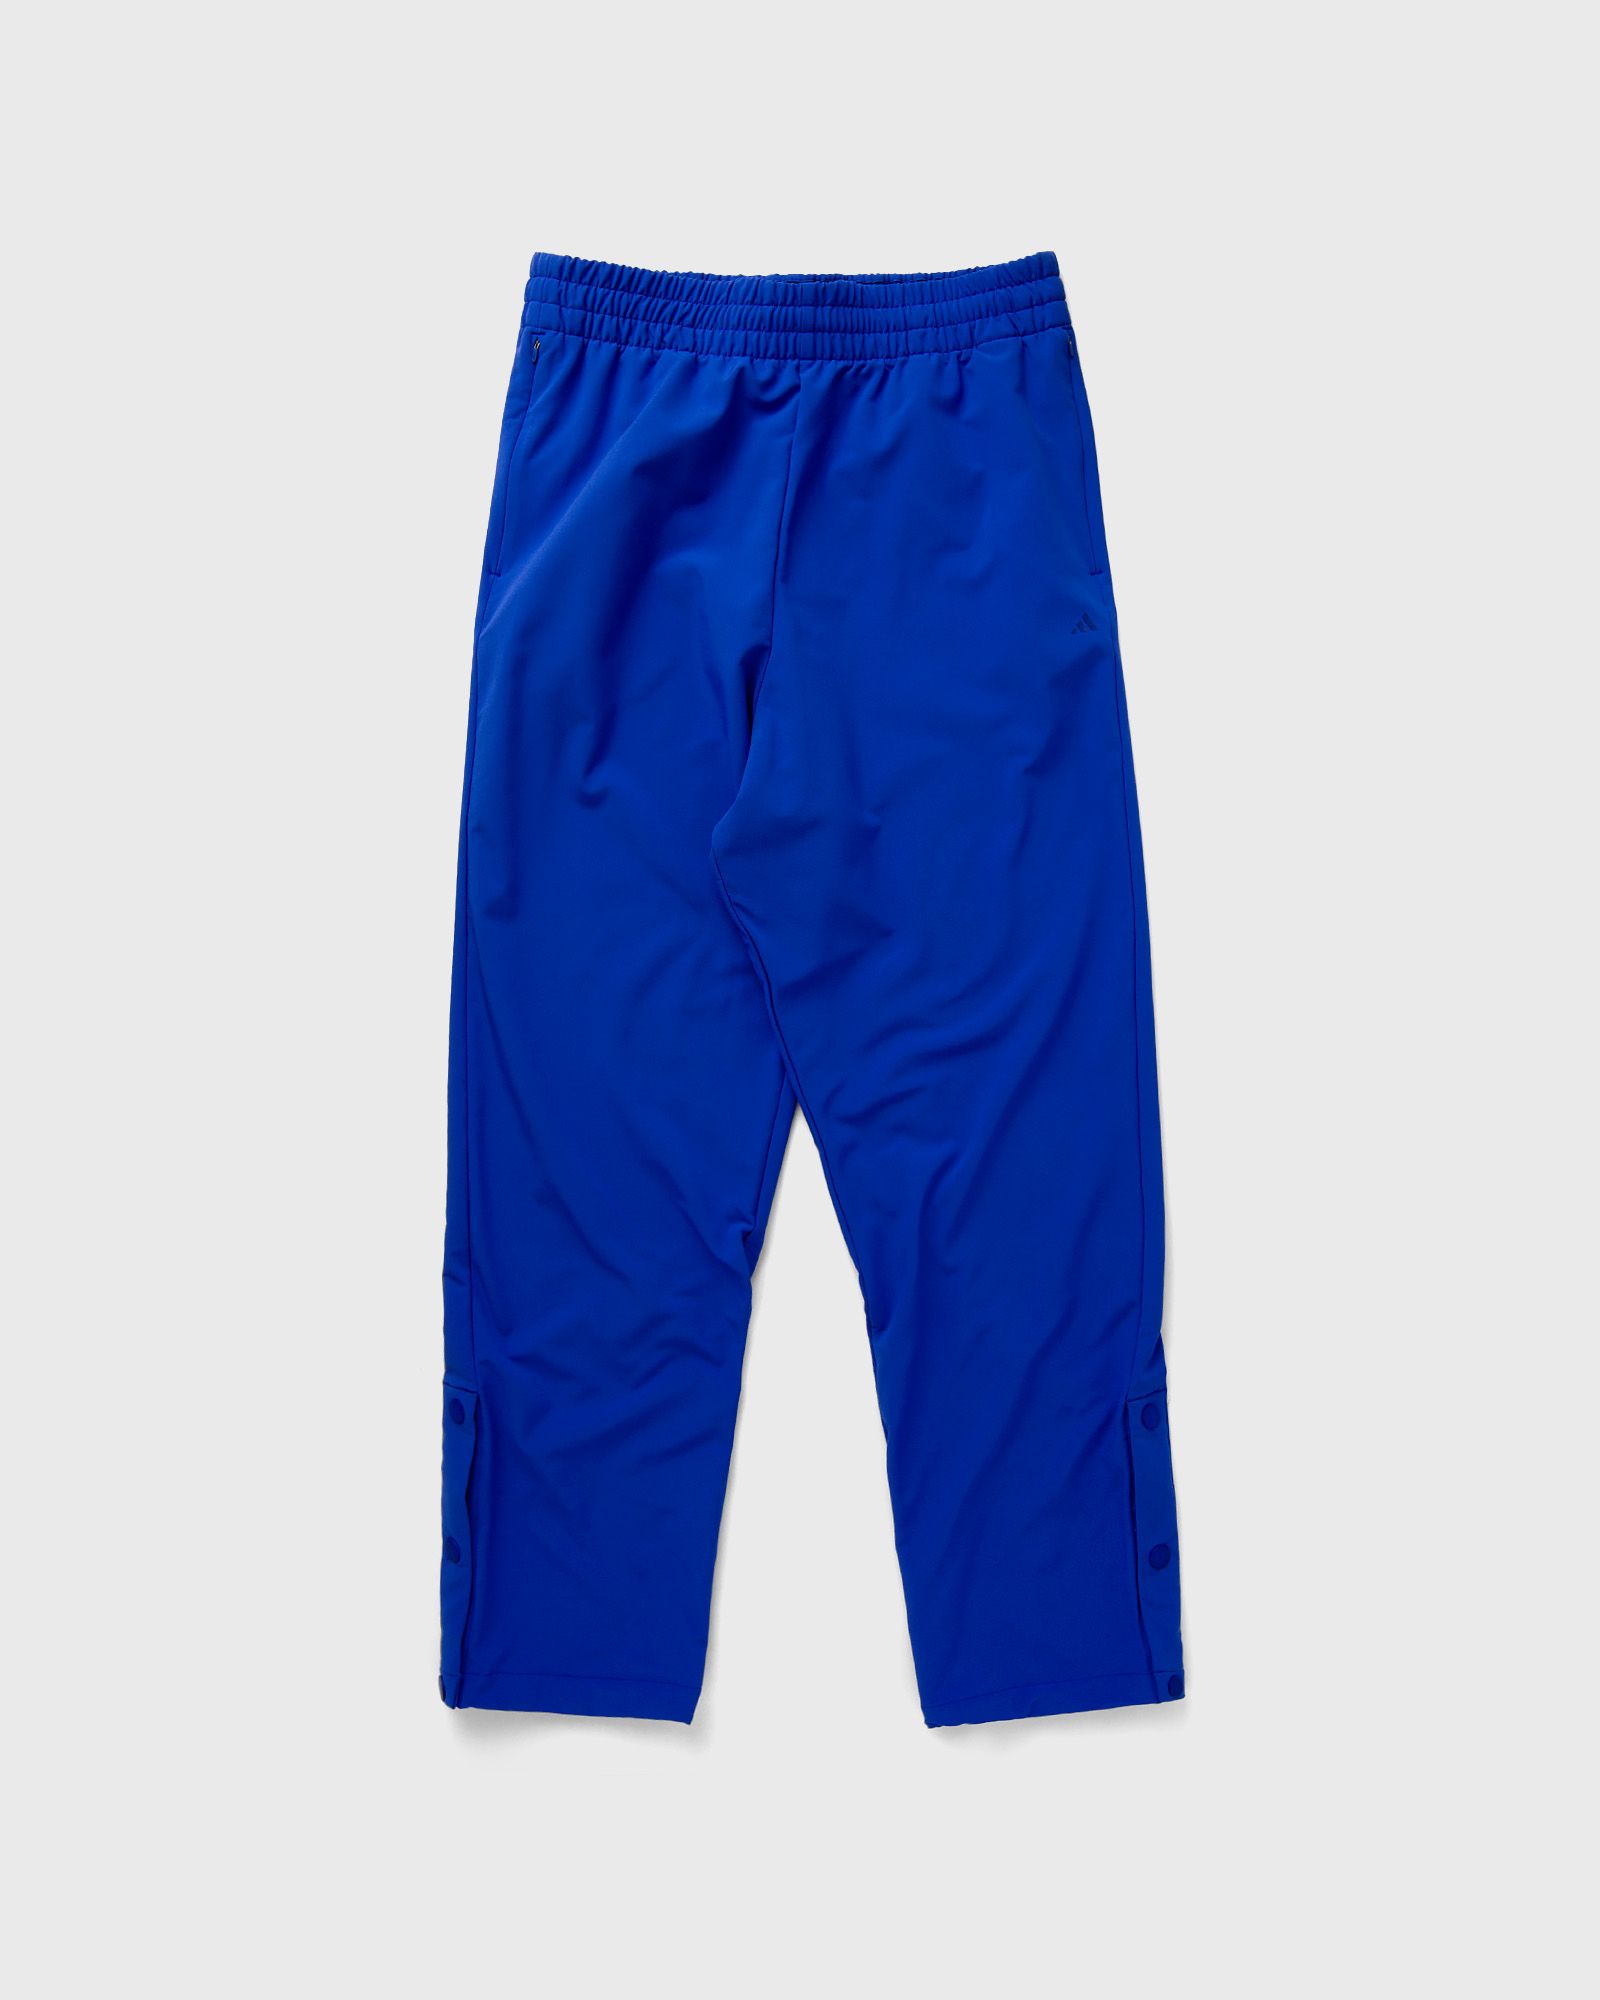 Adidas - adi basketball pant men track pants blue in größe:xl